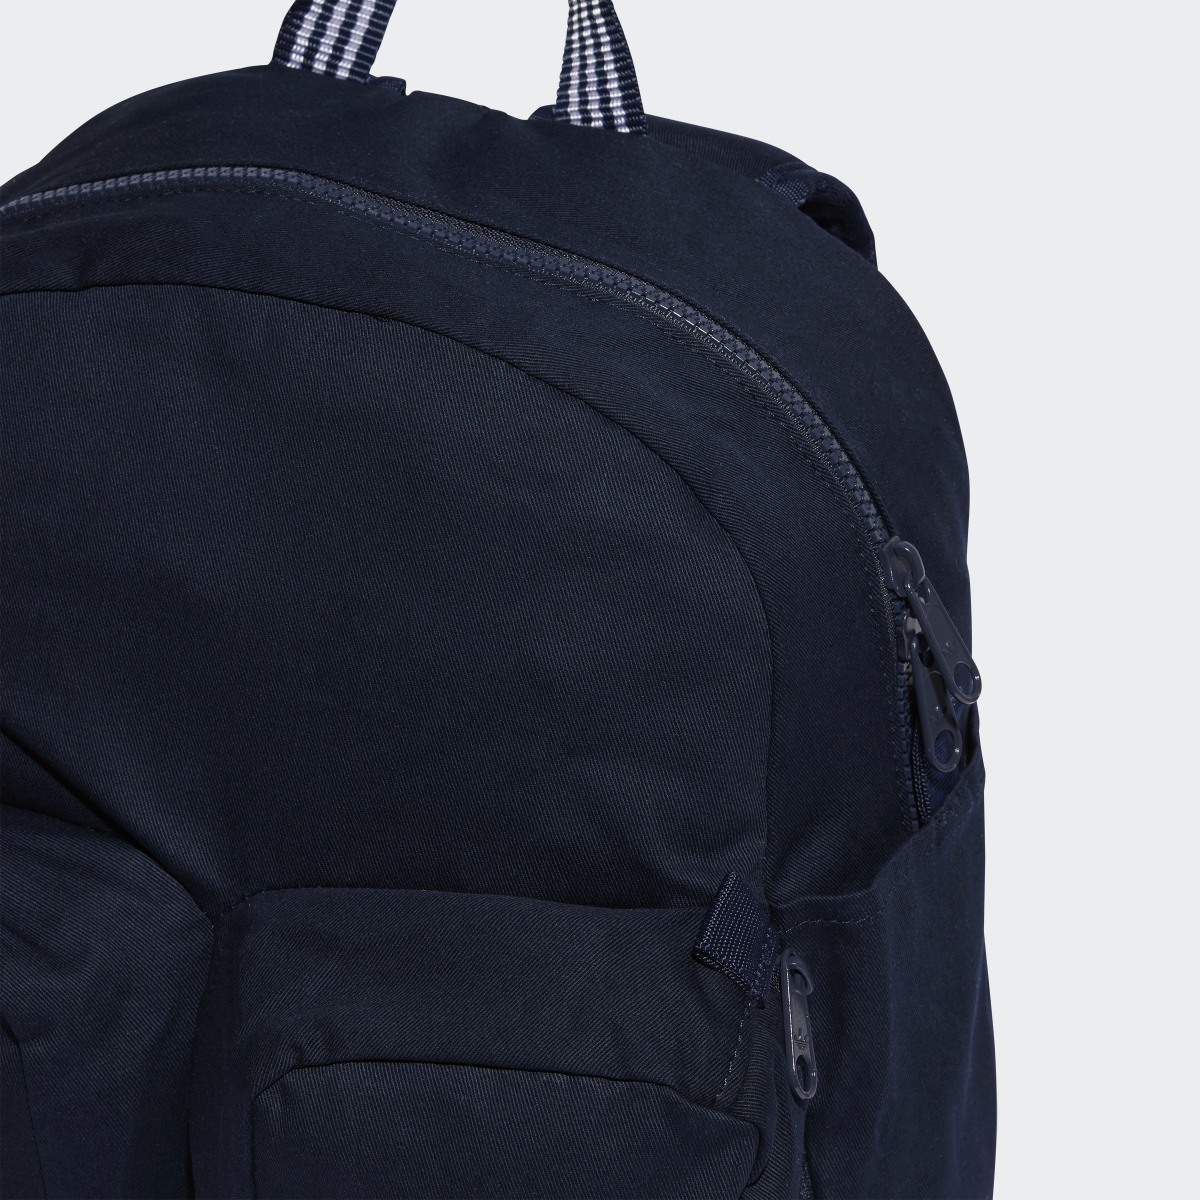 Adidas RIFTA Backpack. 6